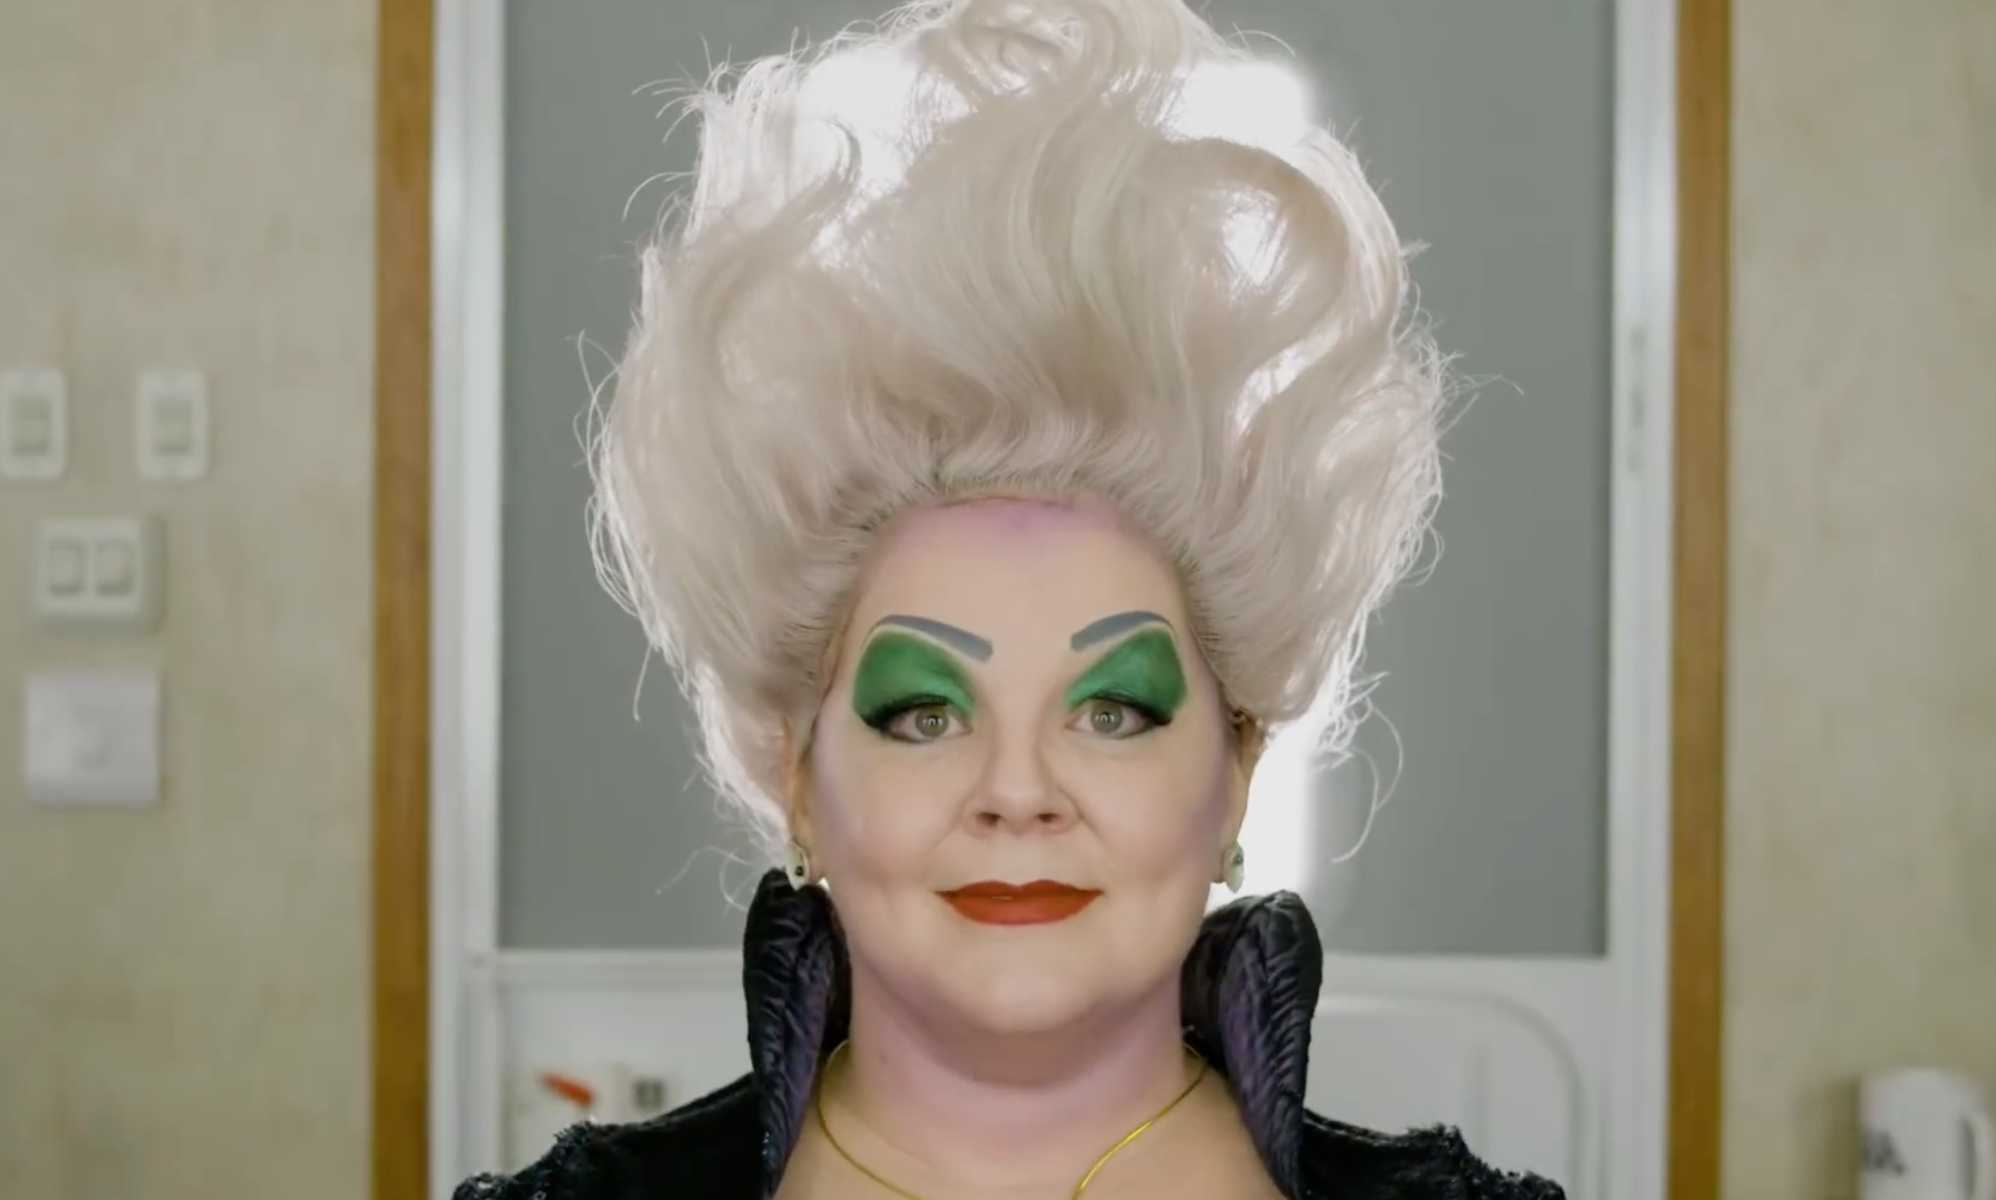 Melissa McCarthy's Ursula makeup routine sparks backlash